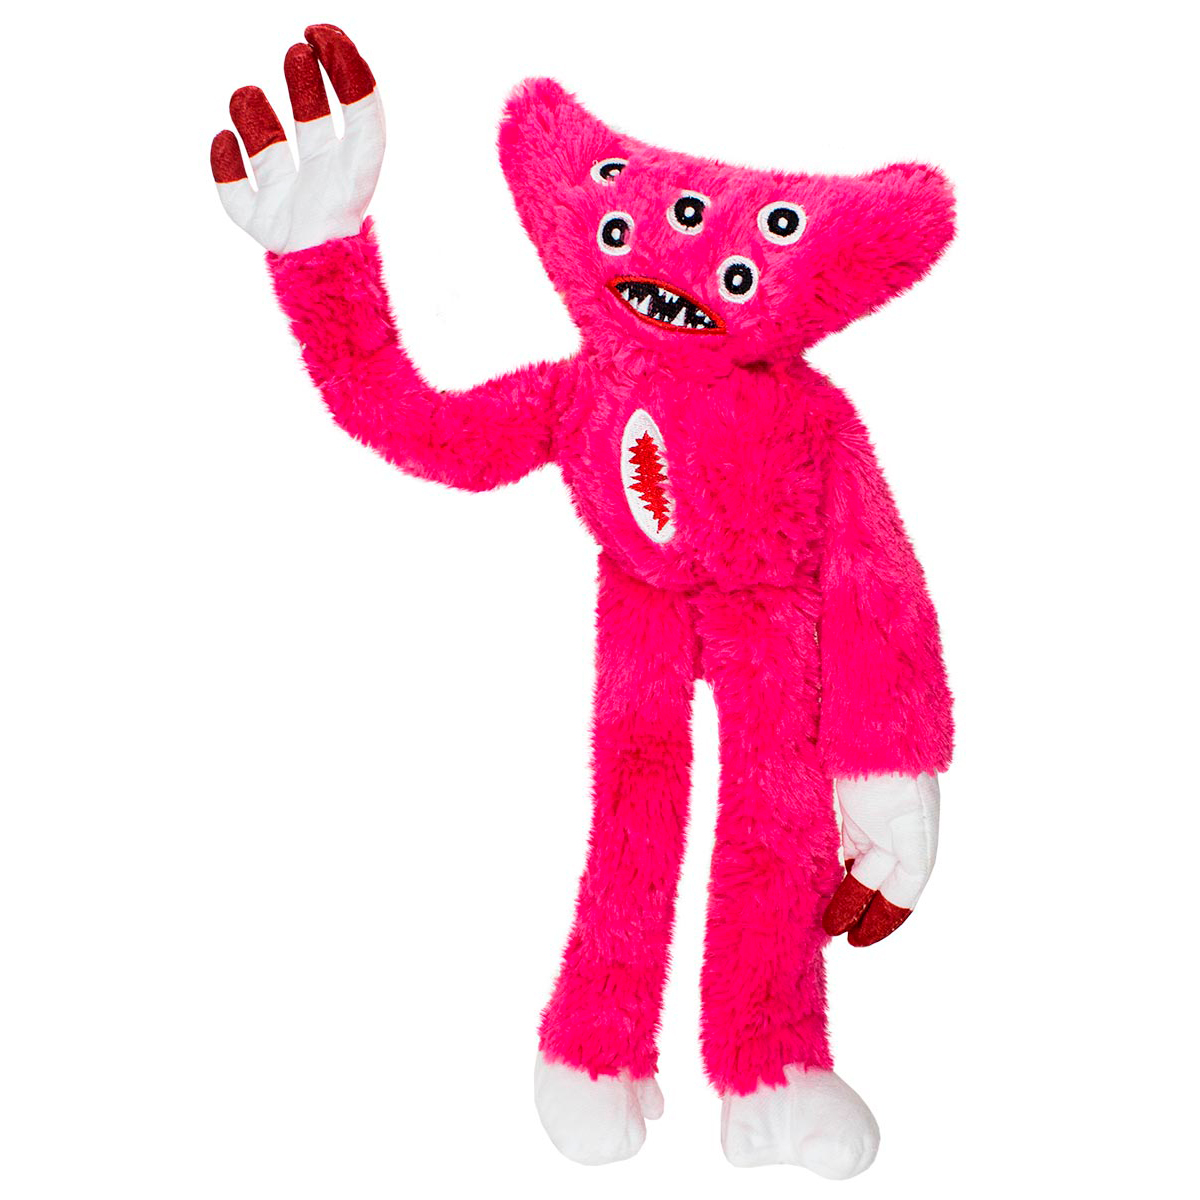 Мягкая игрушка Михи-Михи huggy Wuggy Кисси Мисси розовый 40см - фото 3